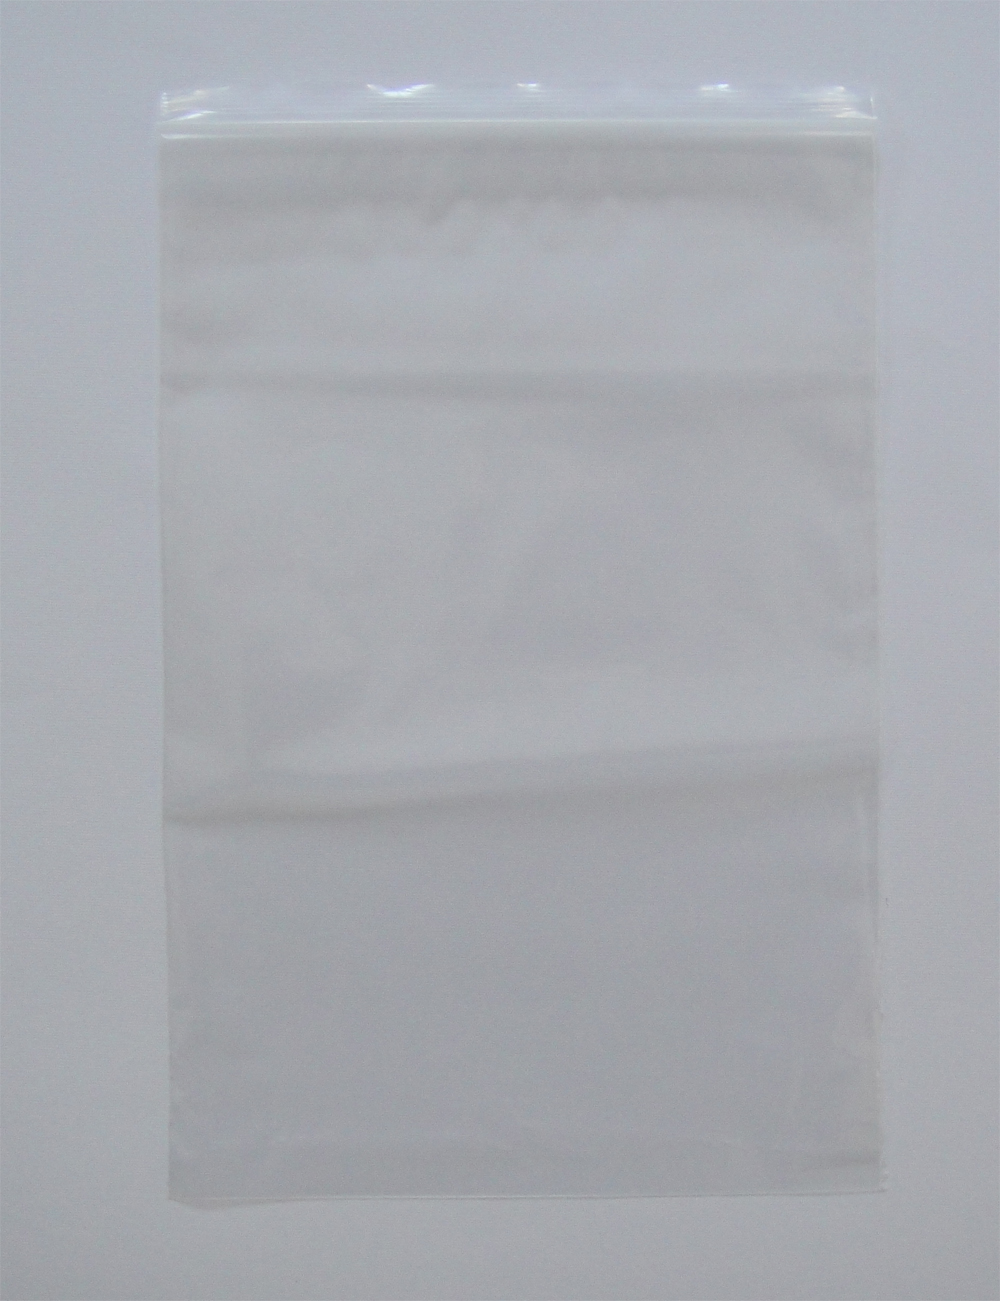 Grip Seal Bags Clear Poly Plastic Resealable Zip Lock Baggies Small Large Medium 